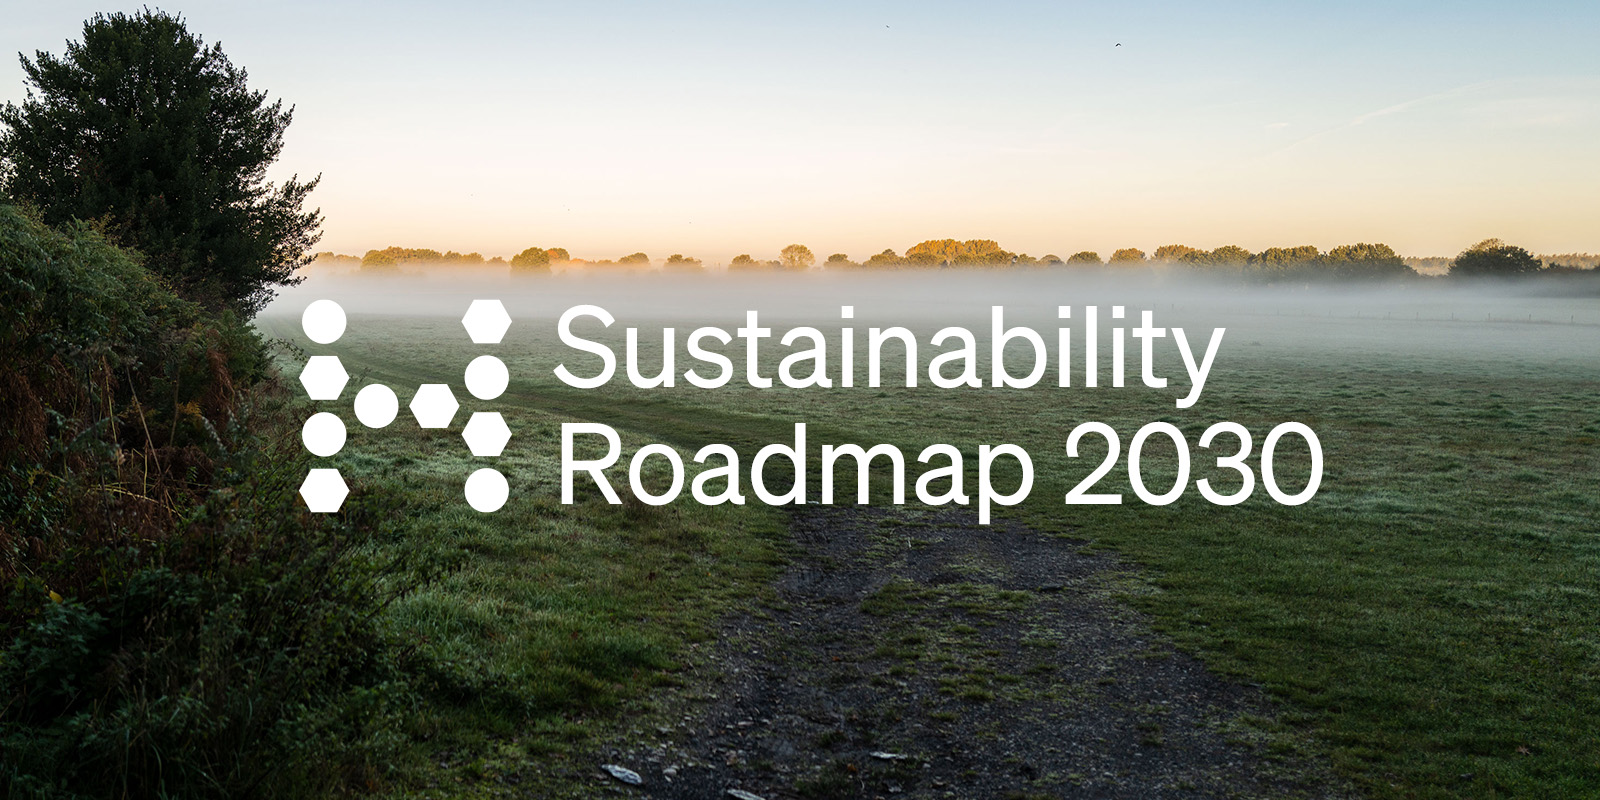 Hexatronic Group Sustainability Roadmap 2030